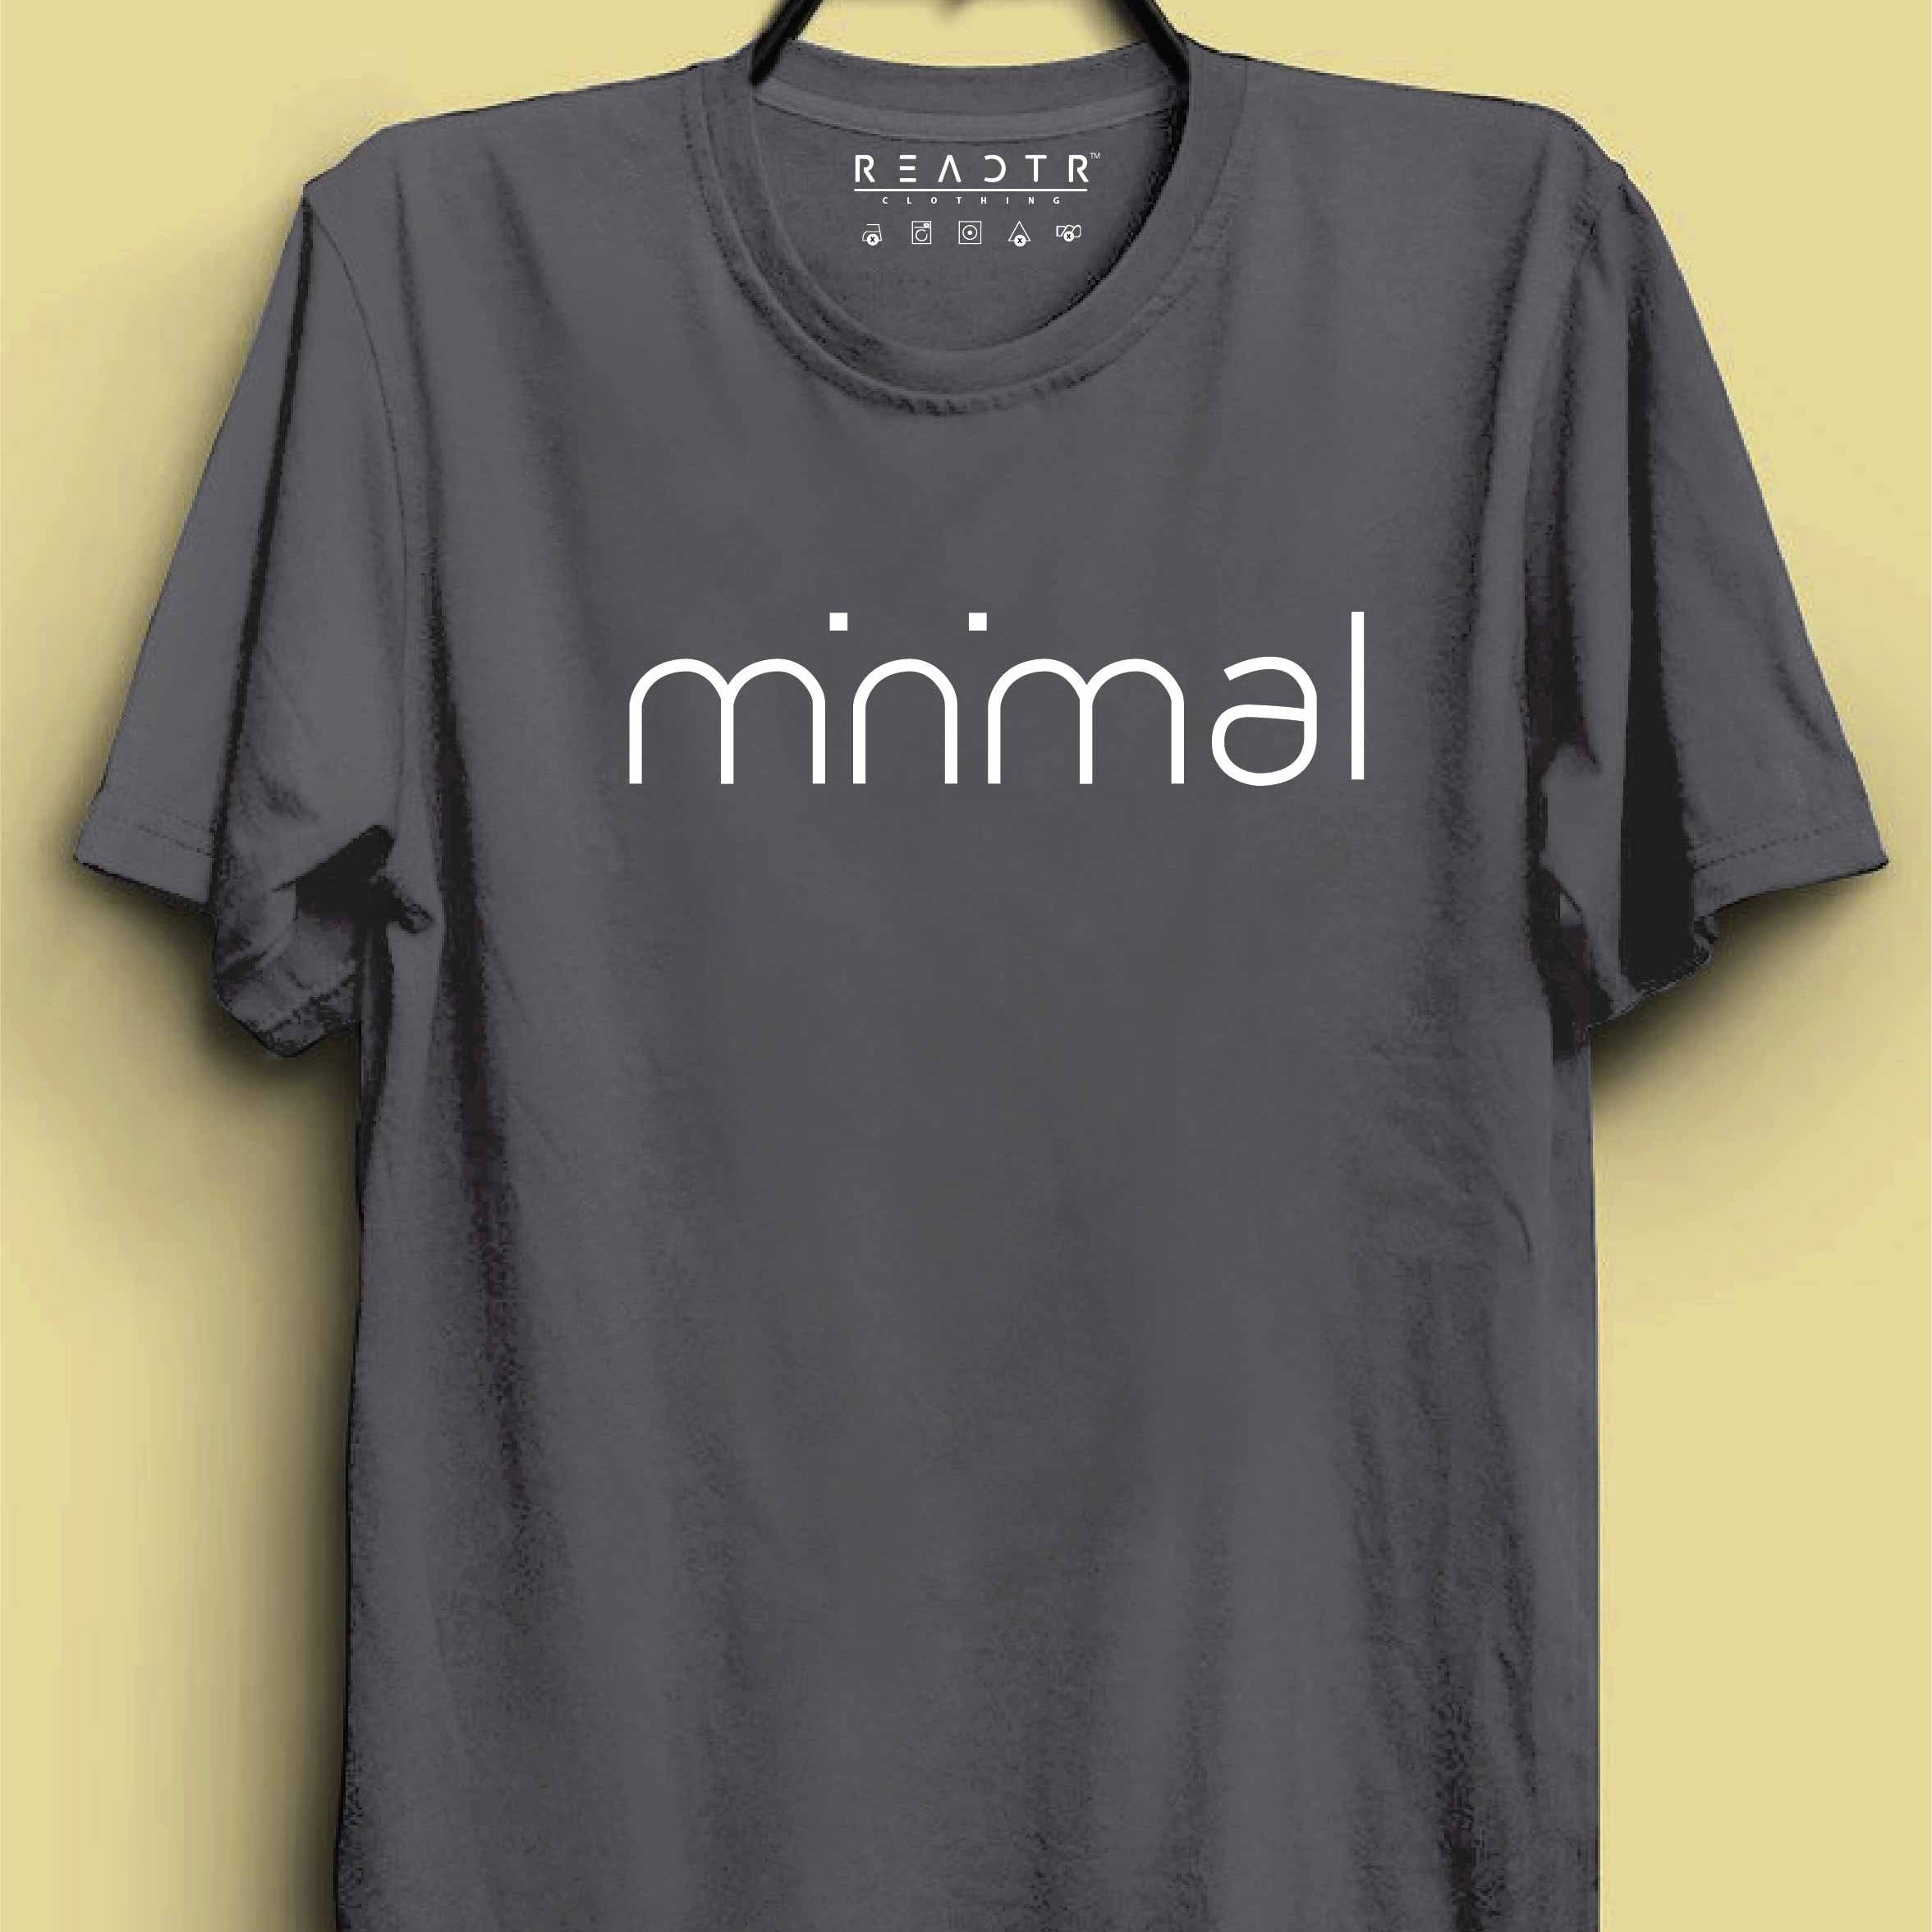 Minimal Reactr Tshirts For Men - Eyewearlabs